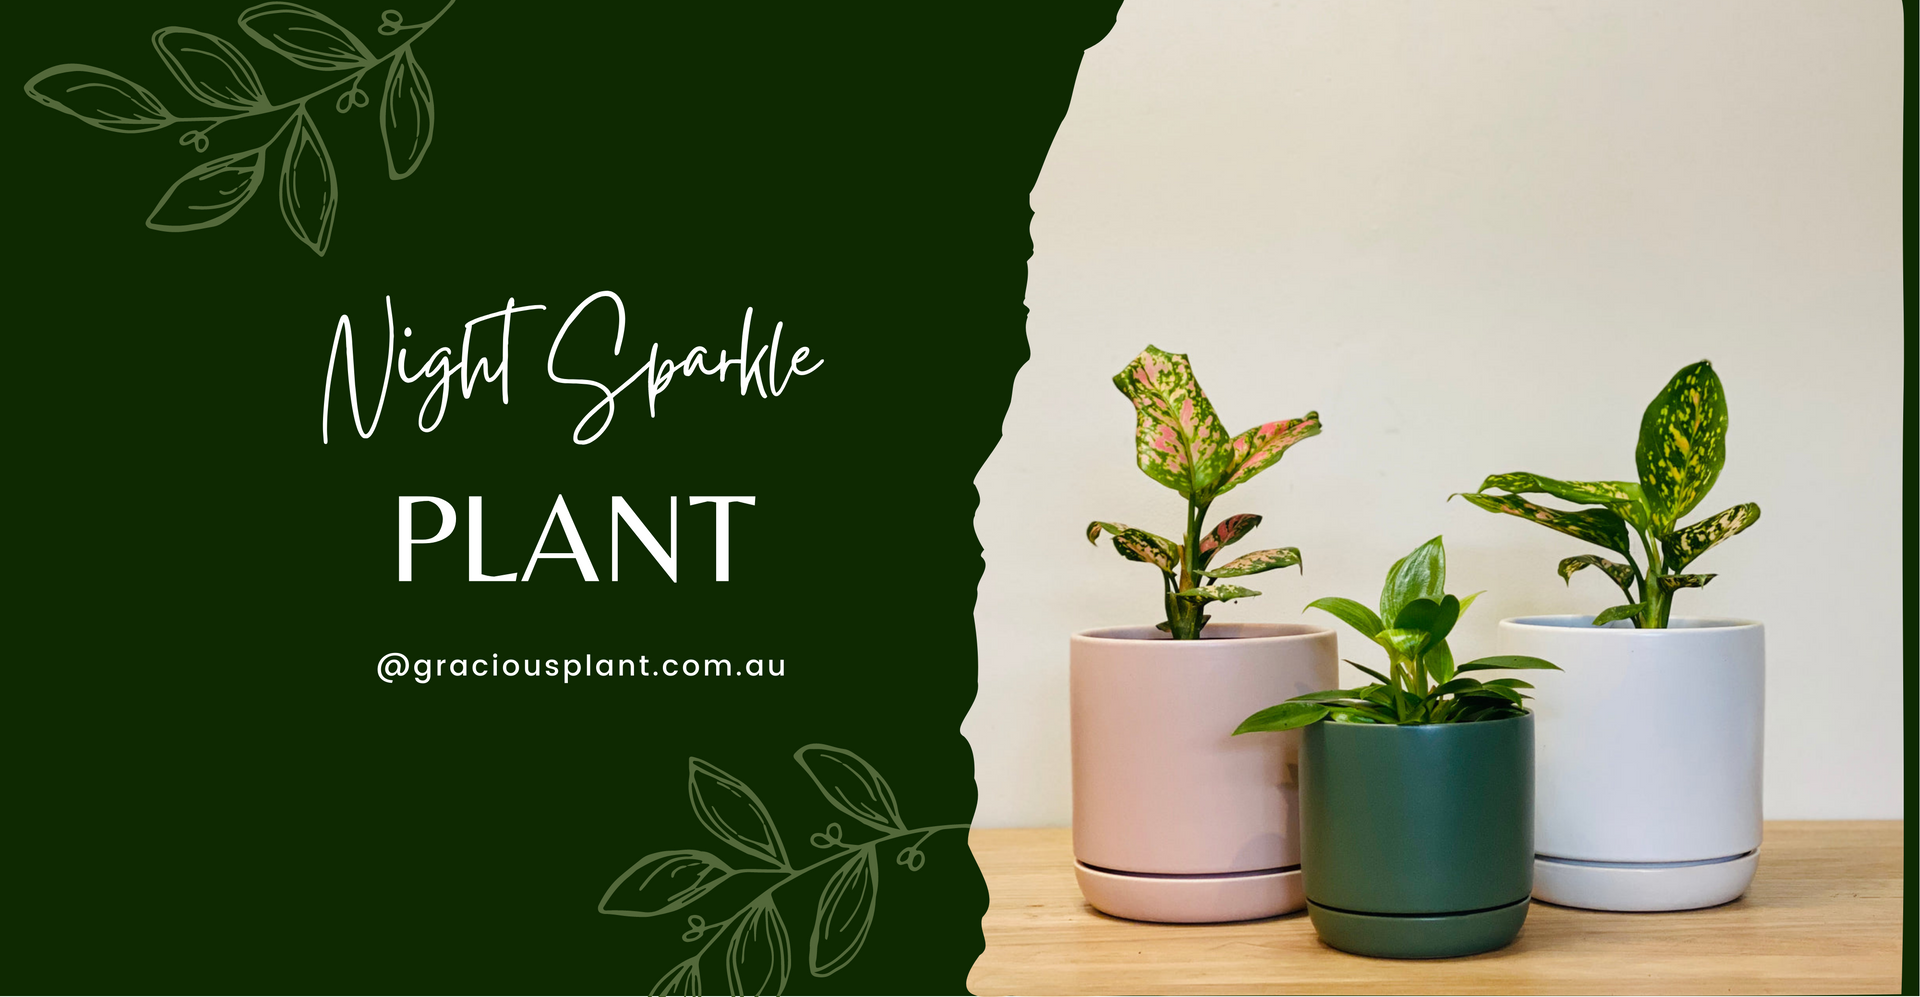 Night Sparkle Plant